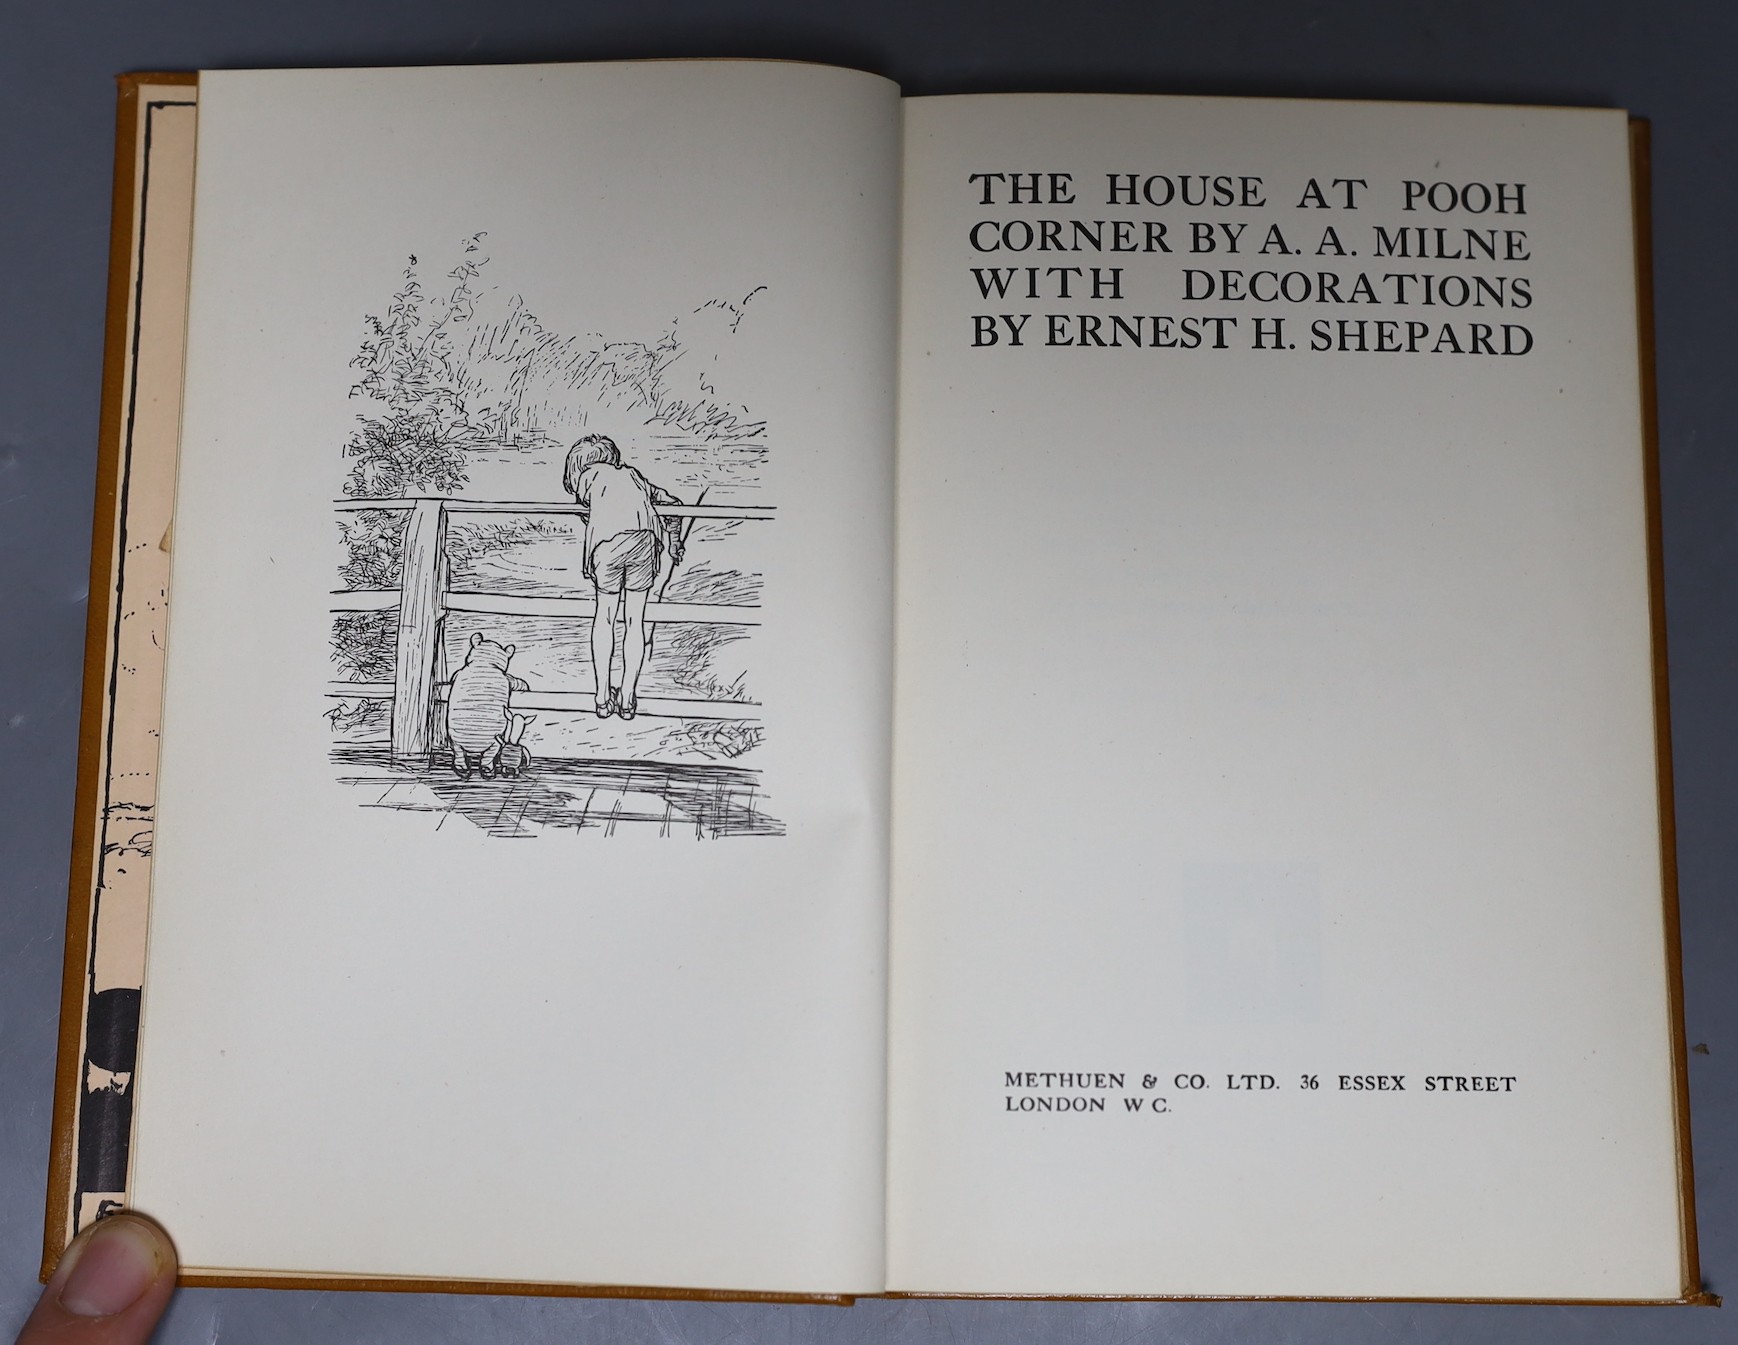 Milne, Alan Alexander - The House at Pooh Corner, 1st edition, illustrated by Ernest H. Shepard, 8vo, rebound calf gilt, Methuen & Co., London, 1928